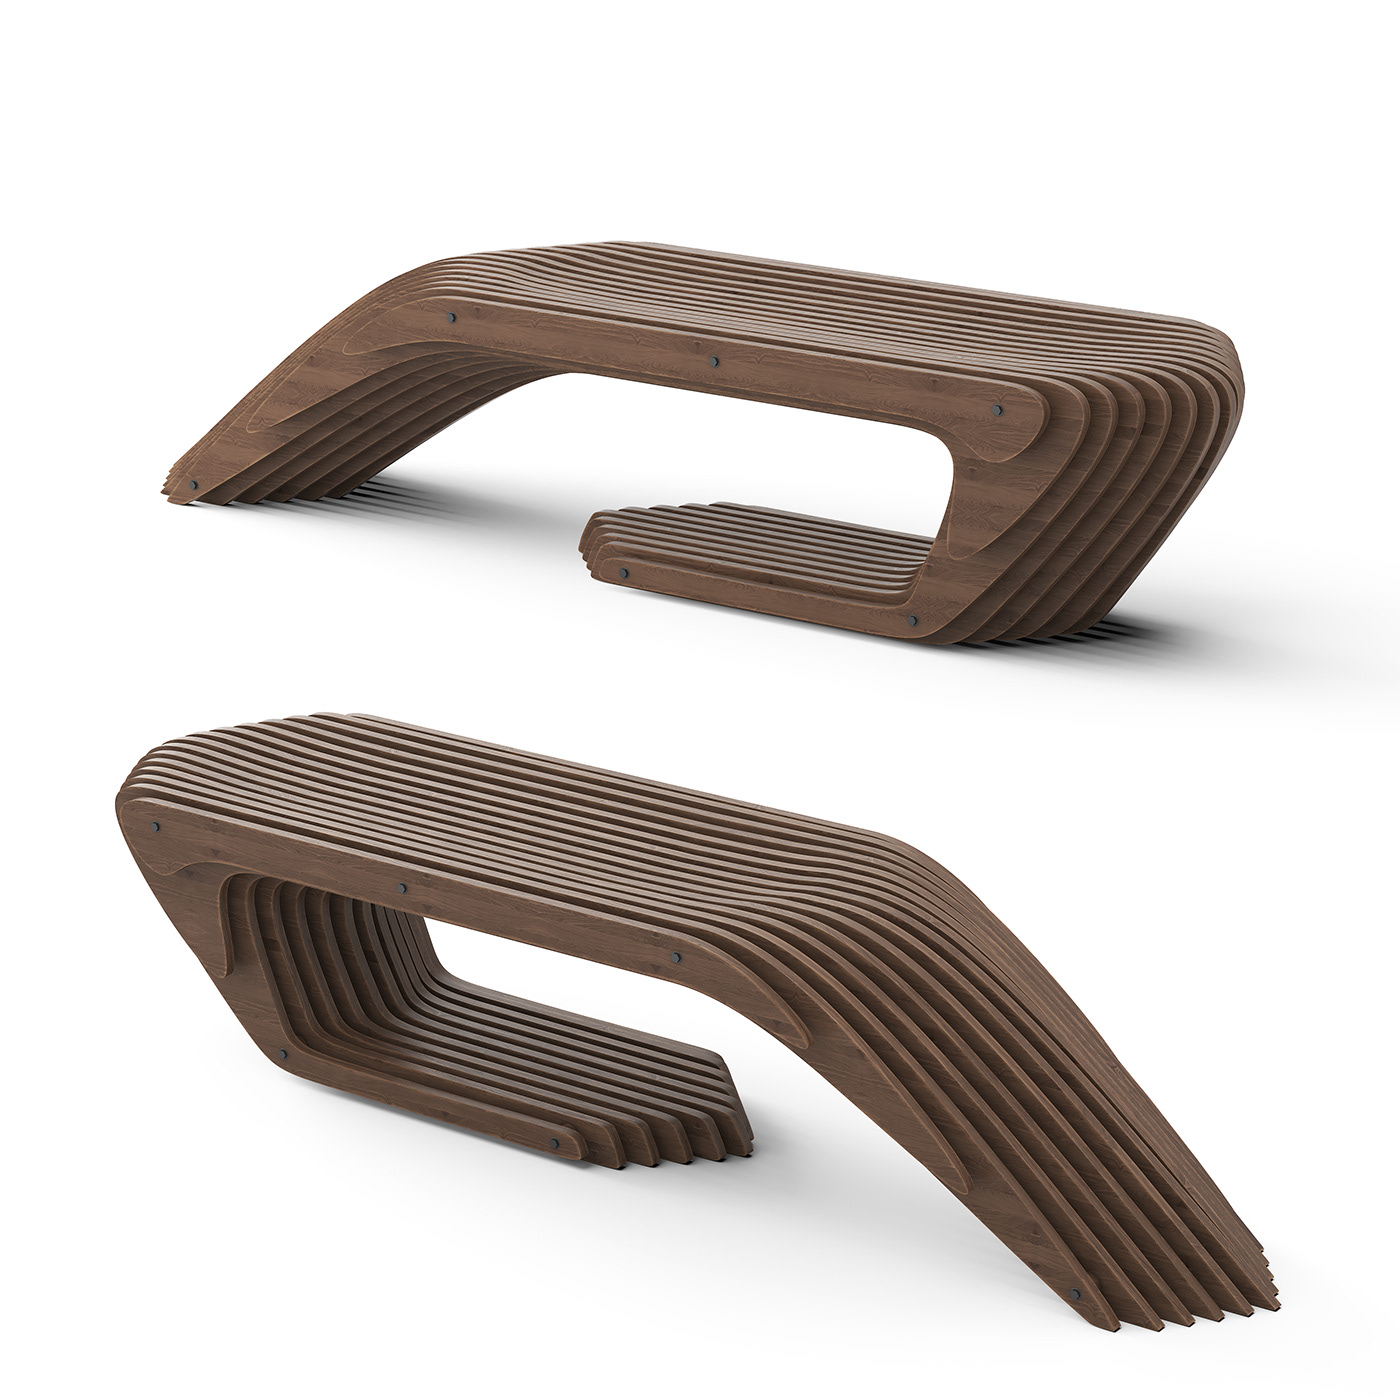 3D vray dxf parametric parametric design bench wooden cnc plywood garden bench